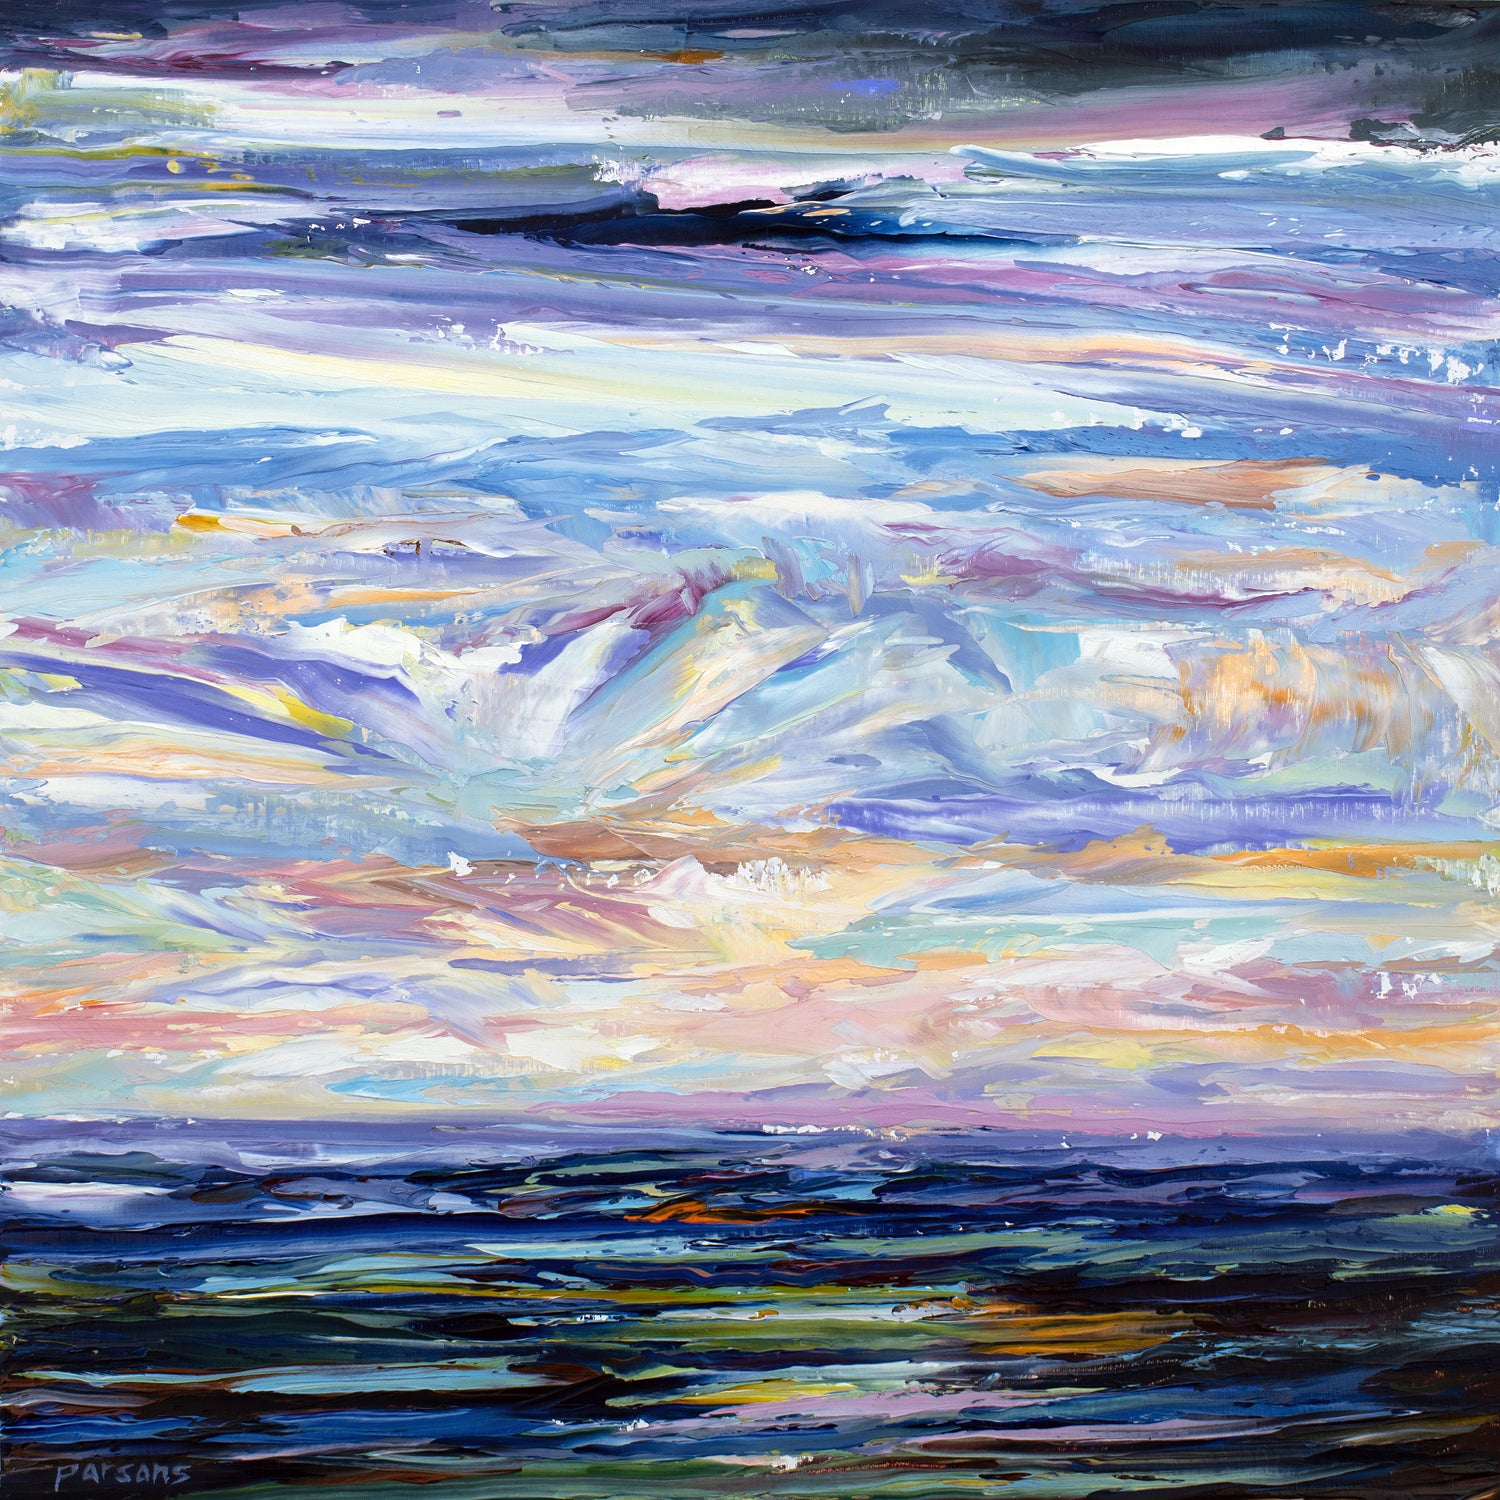 Dark Water Sunset, Cape Cod Bay, Massachusetts. Original Oil on cradled birch panel painting.